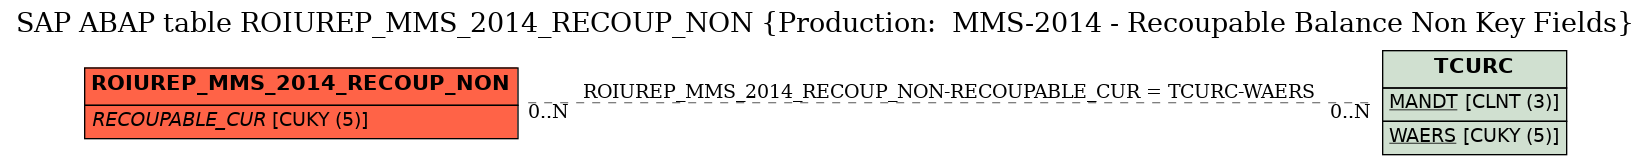 E-R Diagram for table ROIUREP_MMS_2014_RECOUP_NON (Production:  MMS-2014 - Recoupable Balance Non Key Fields)